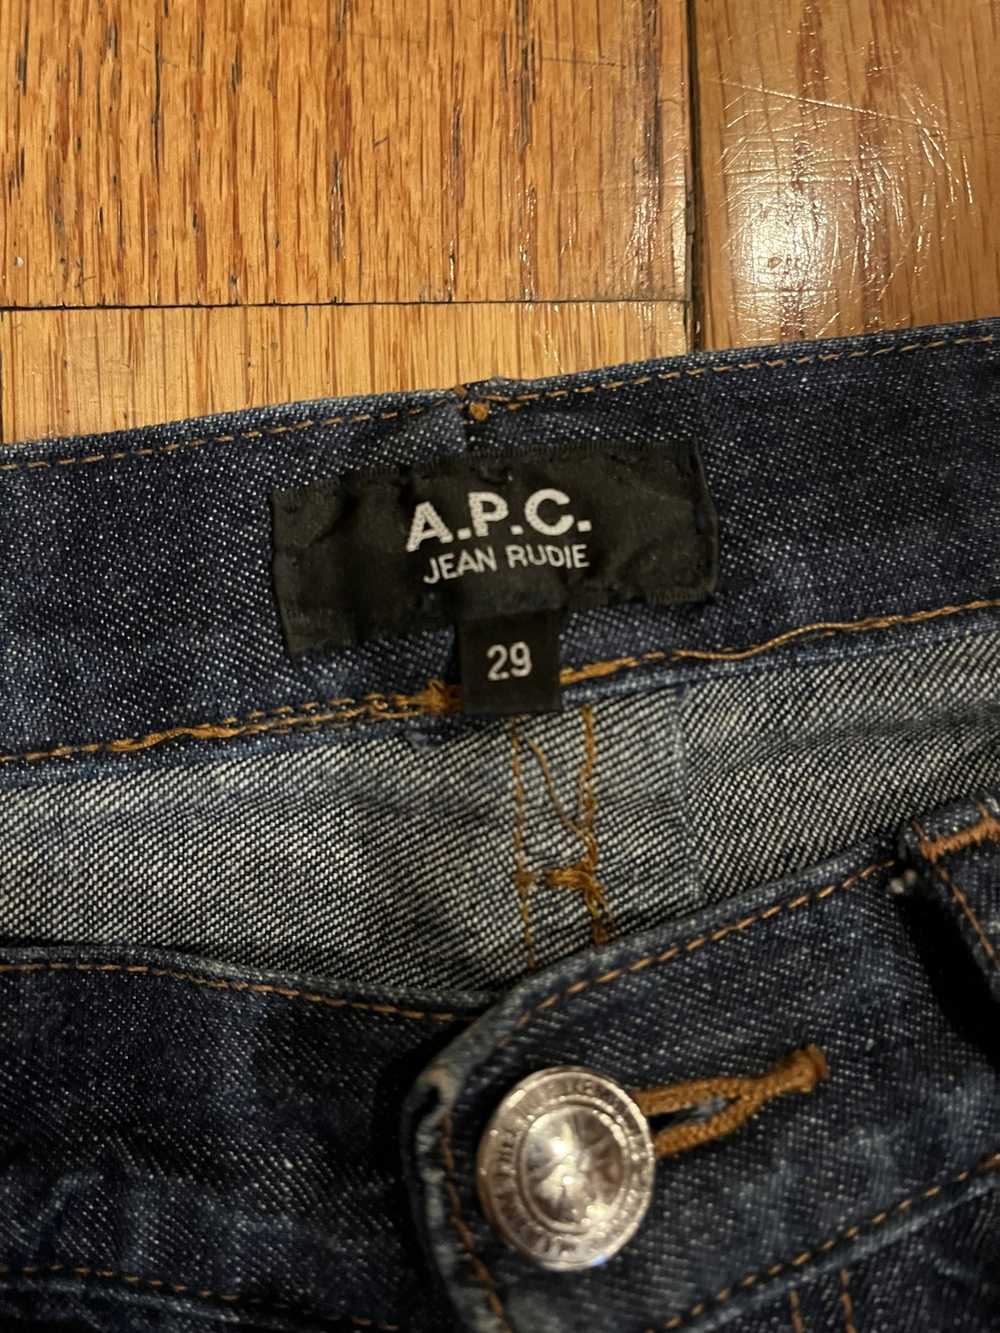 A.P.C. A.P.C. Indigo Rudie Cut-Off Jeans - image 5